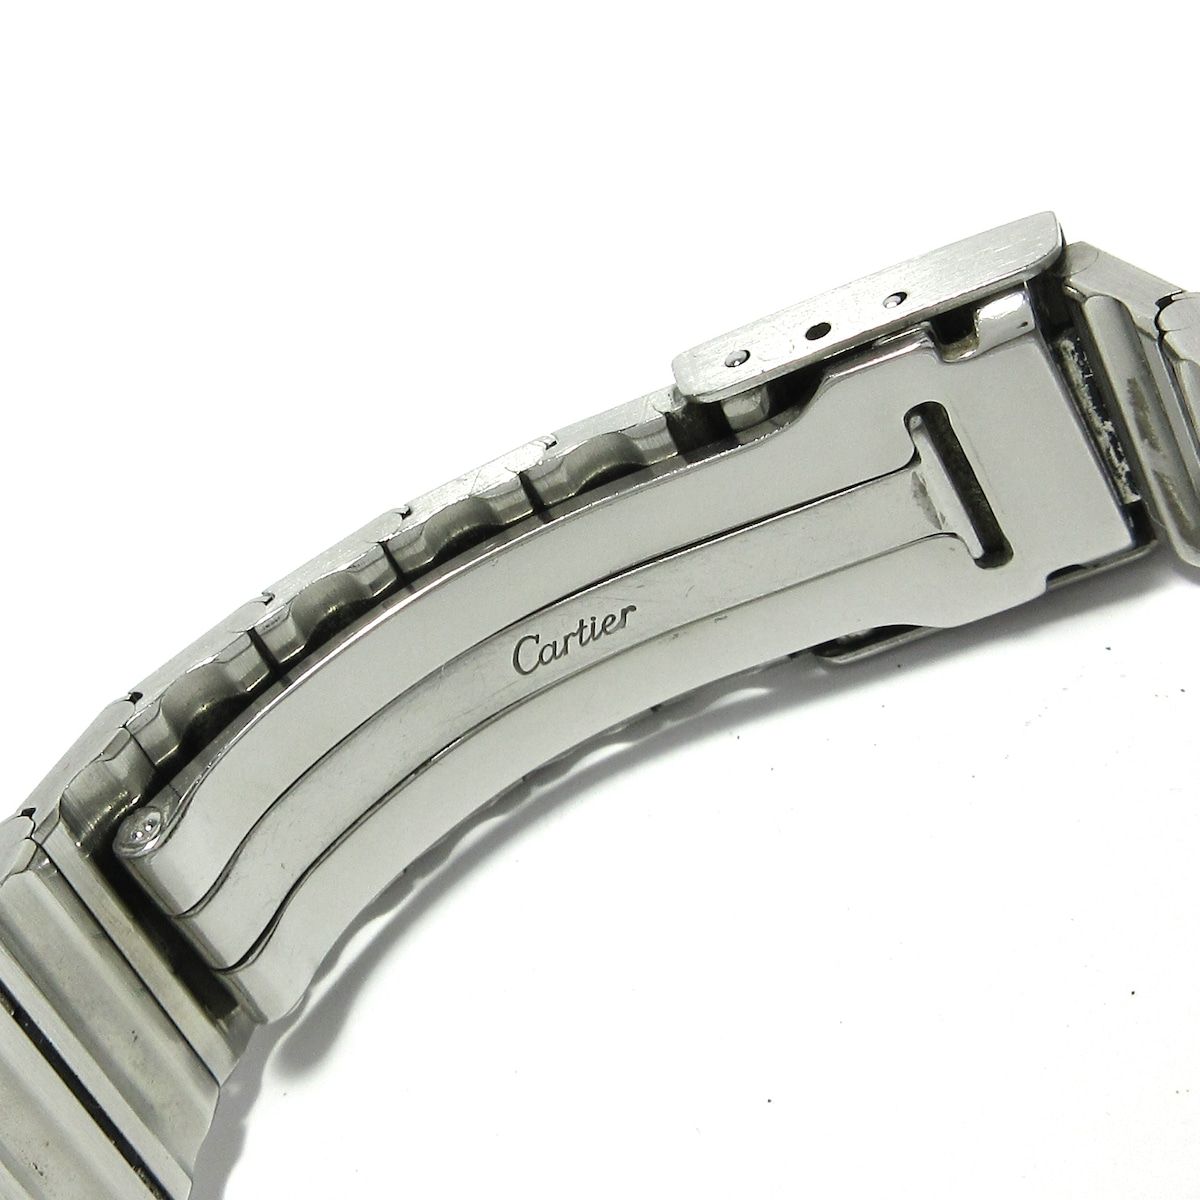 Cartier(カルティエ) 腕時計 サントスオクタゴン ボーイズ アイボリー